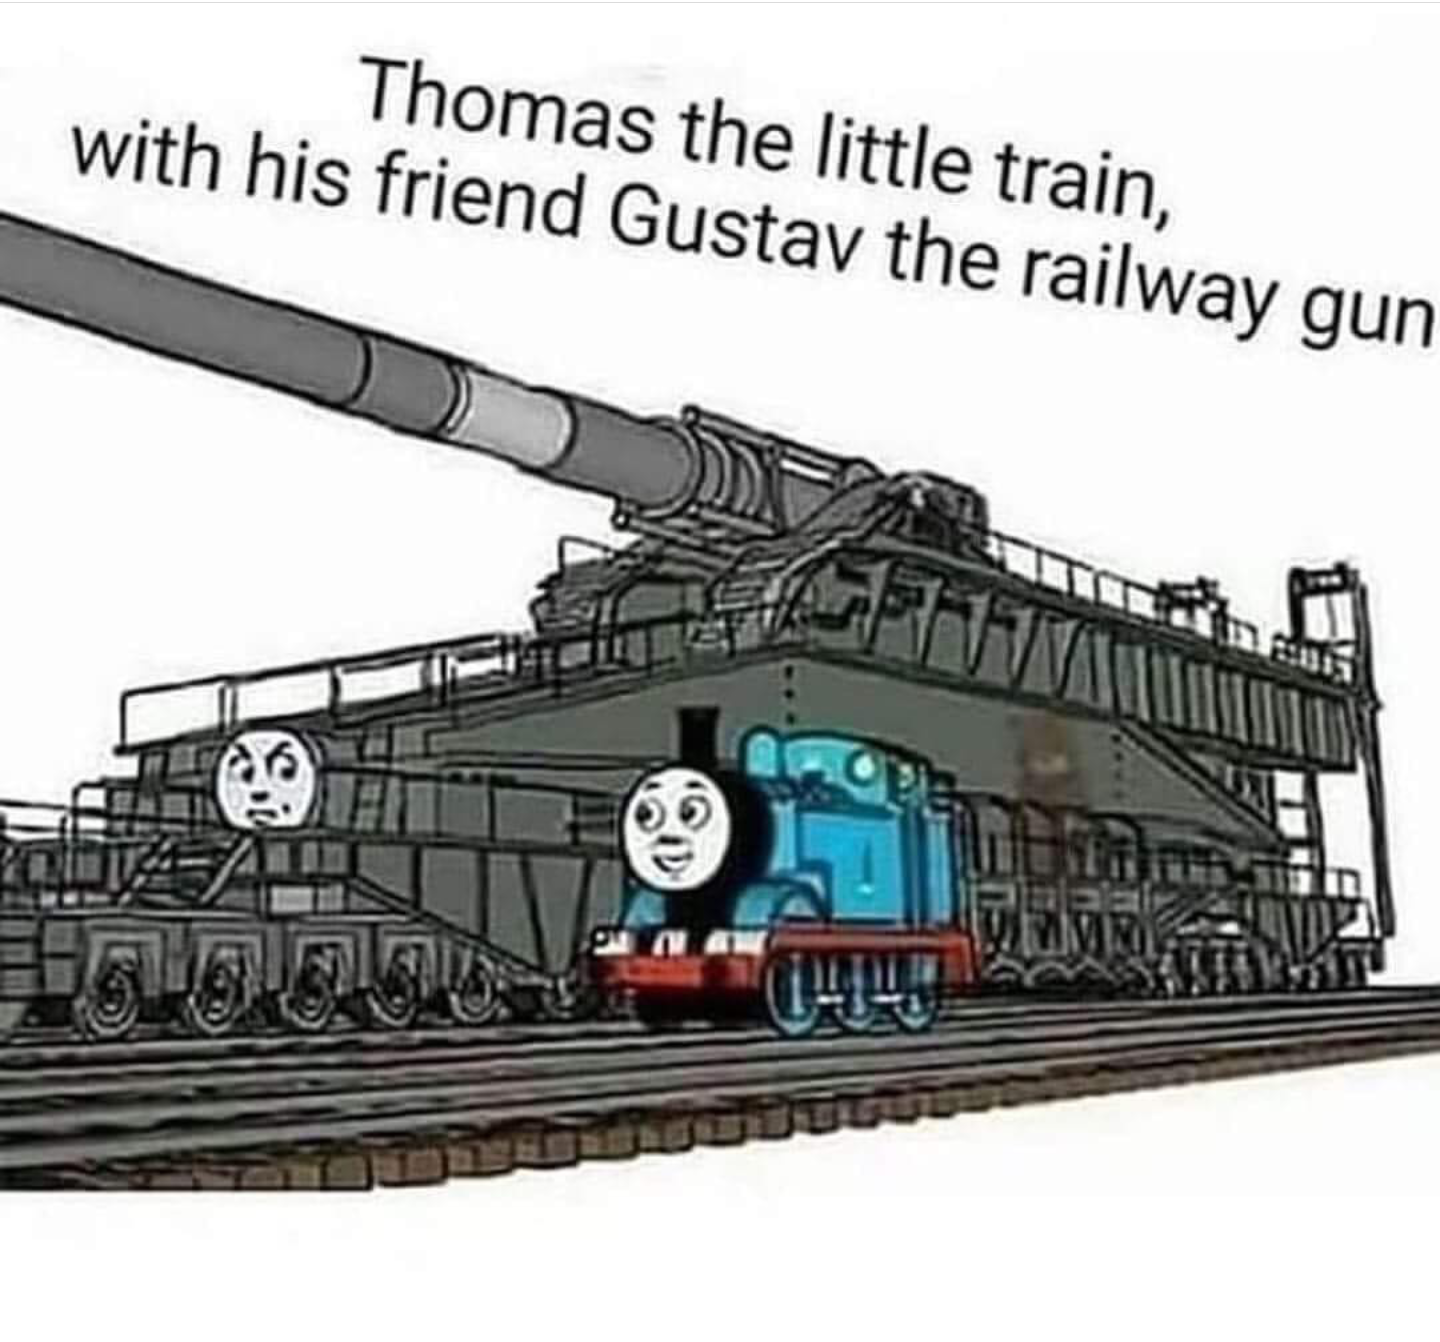 The German edition of Thomas